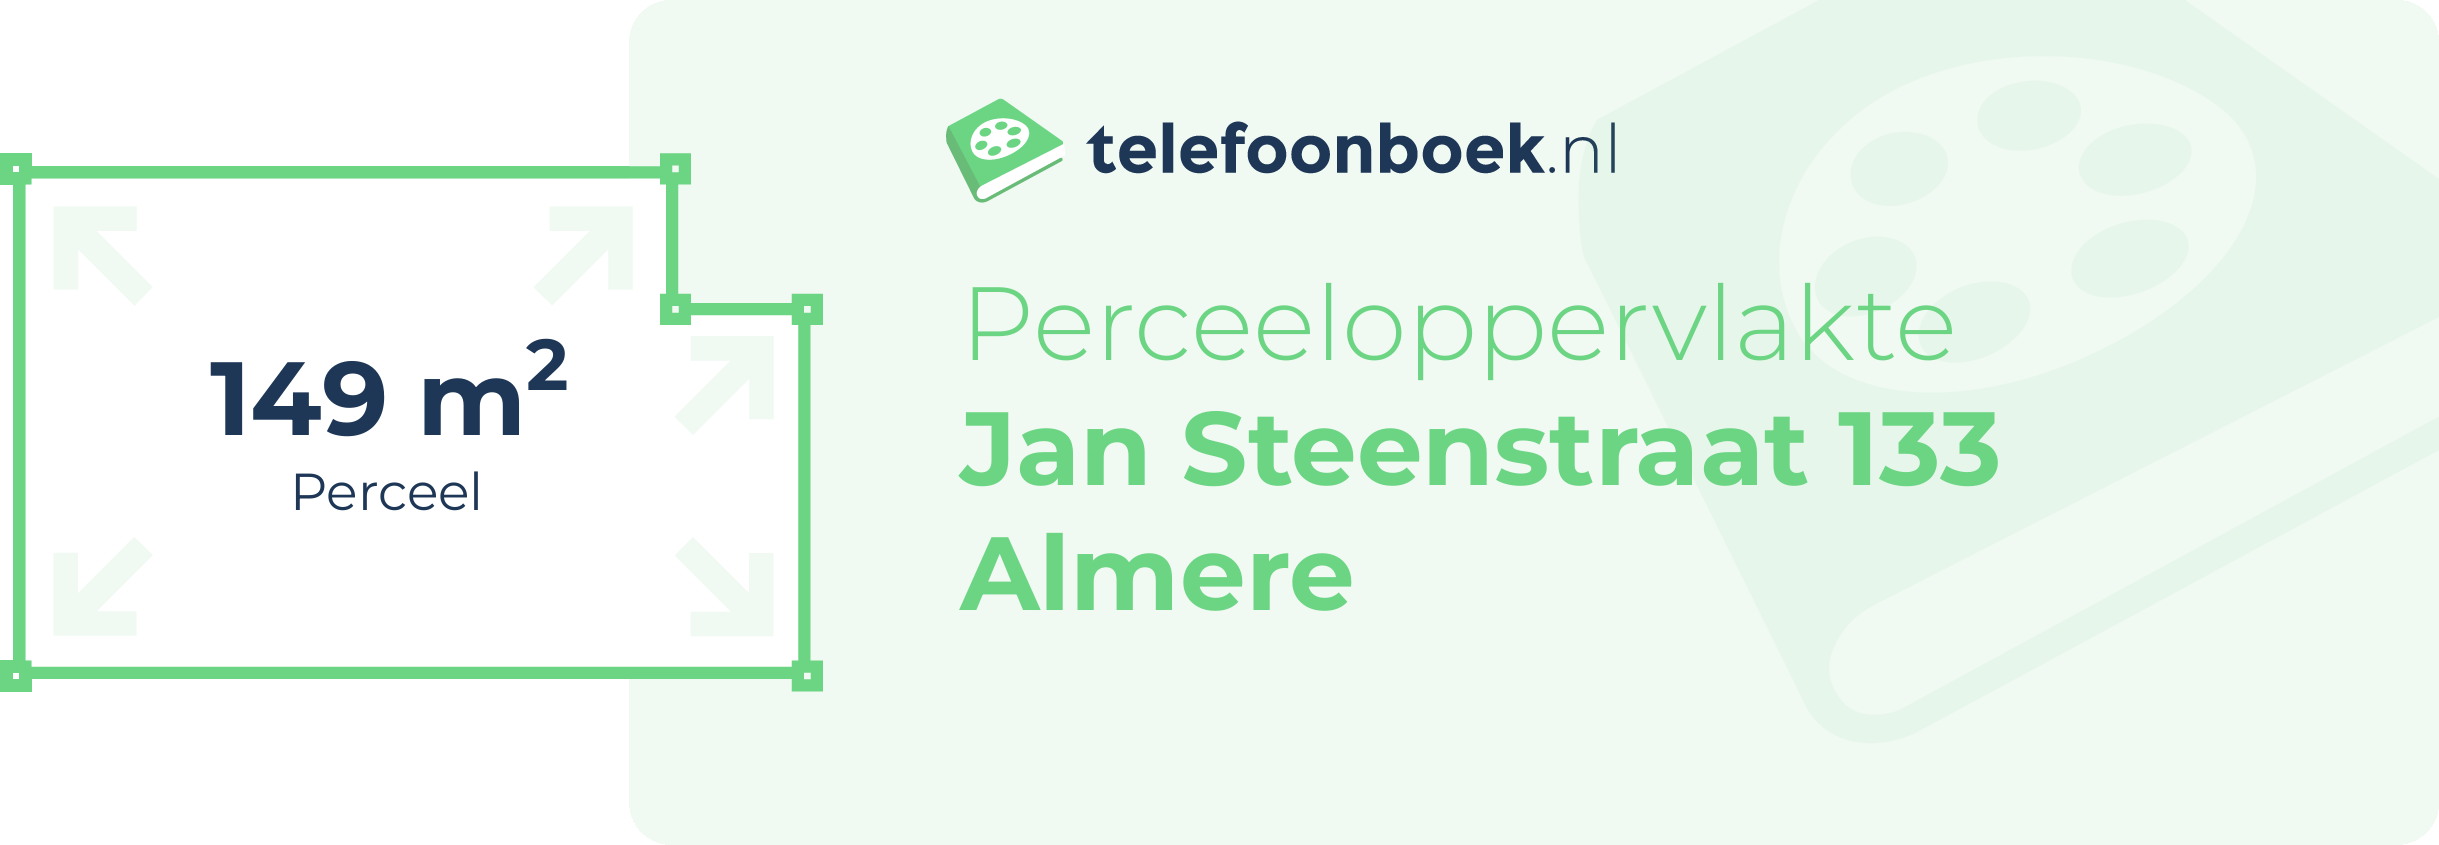 Perceeloppervlakte Jan Steenstraat 133 Almere